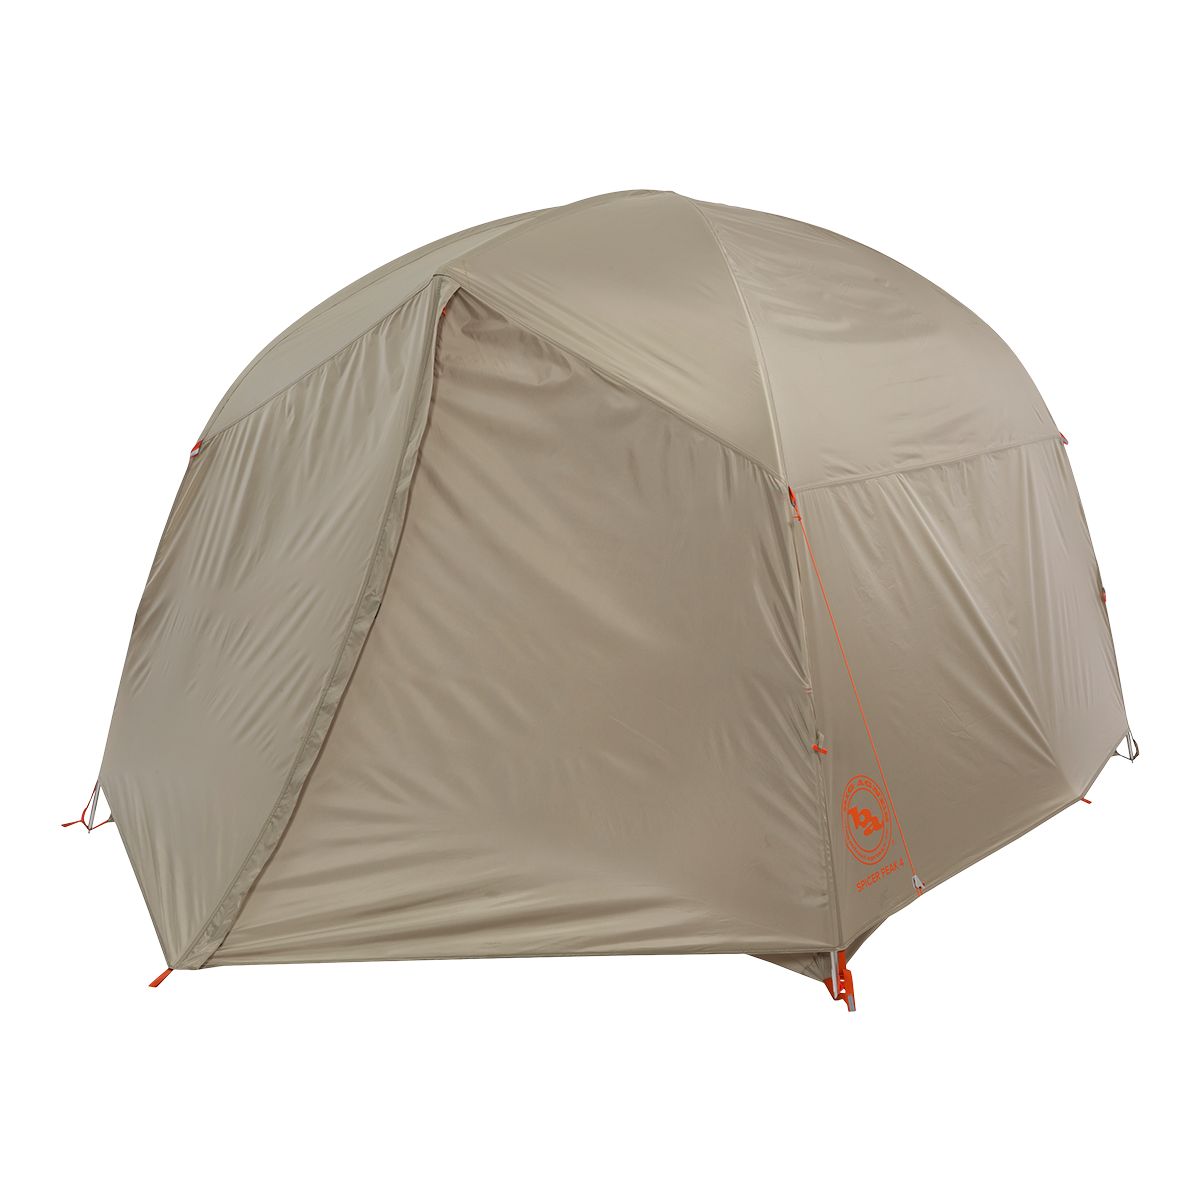 Image of Big Agnes Spicer Peak 6 Person Tent